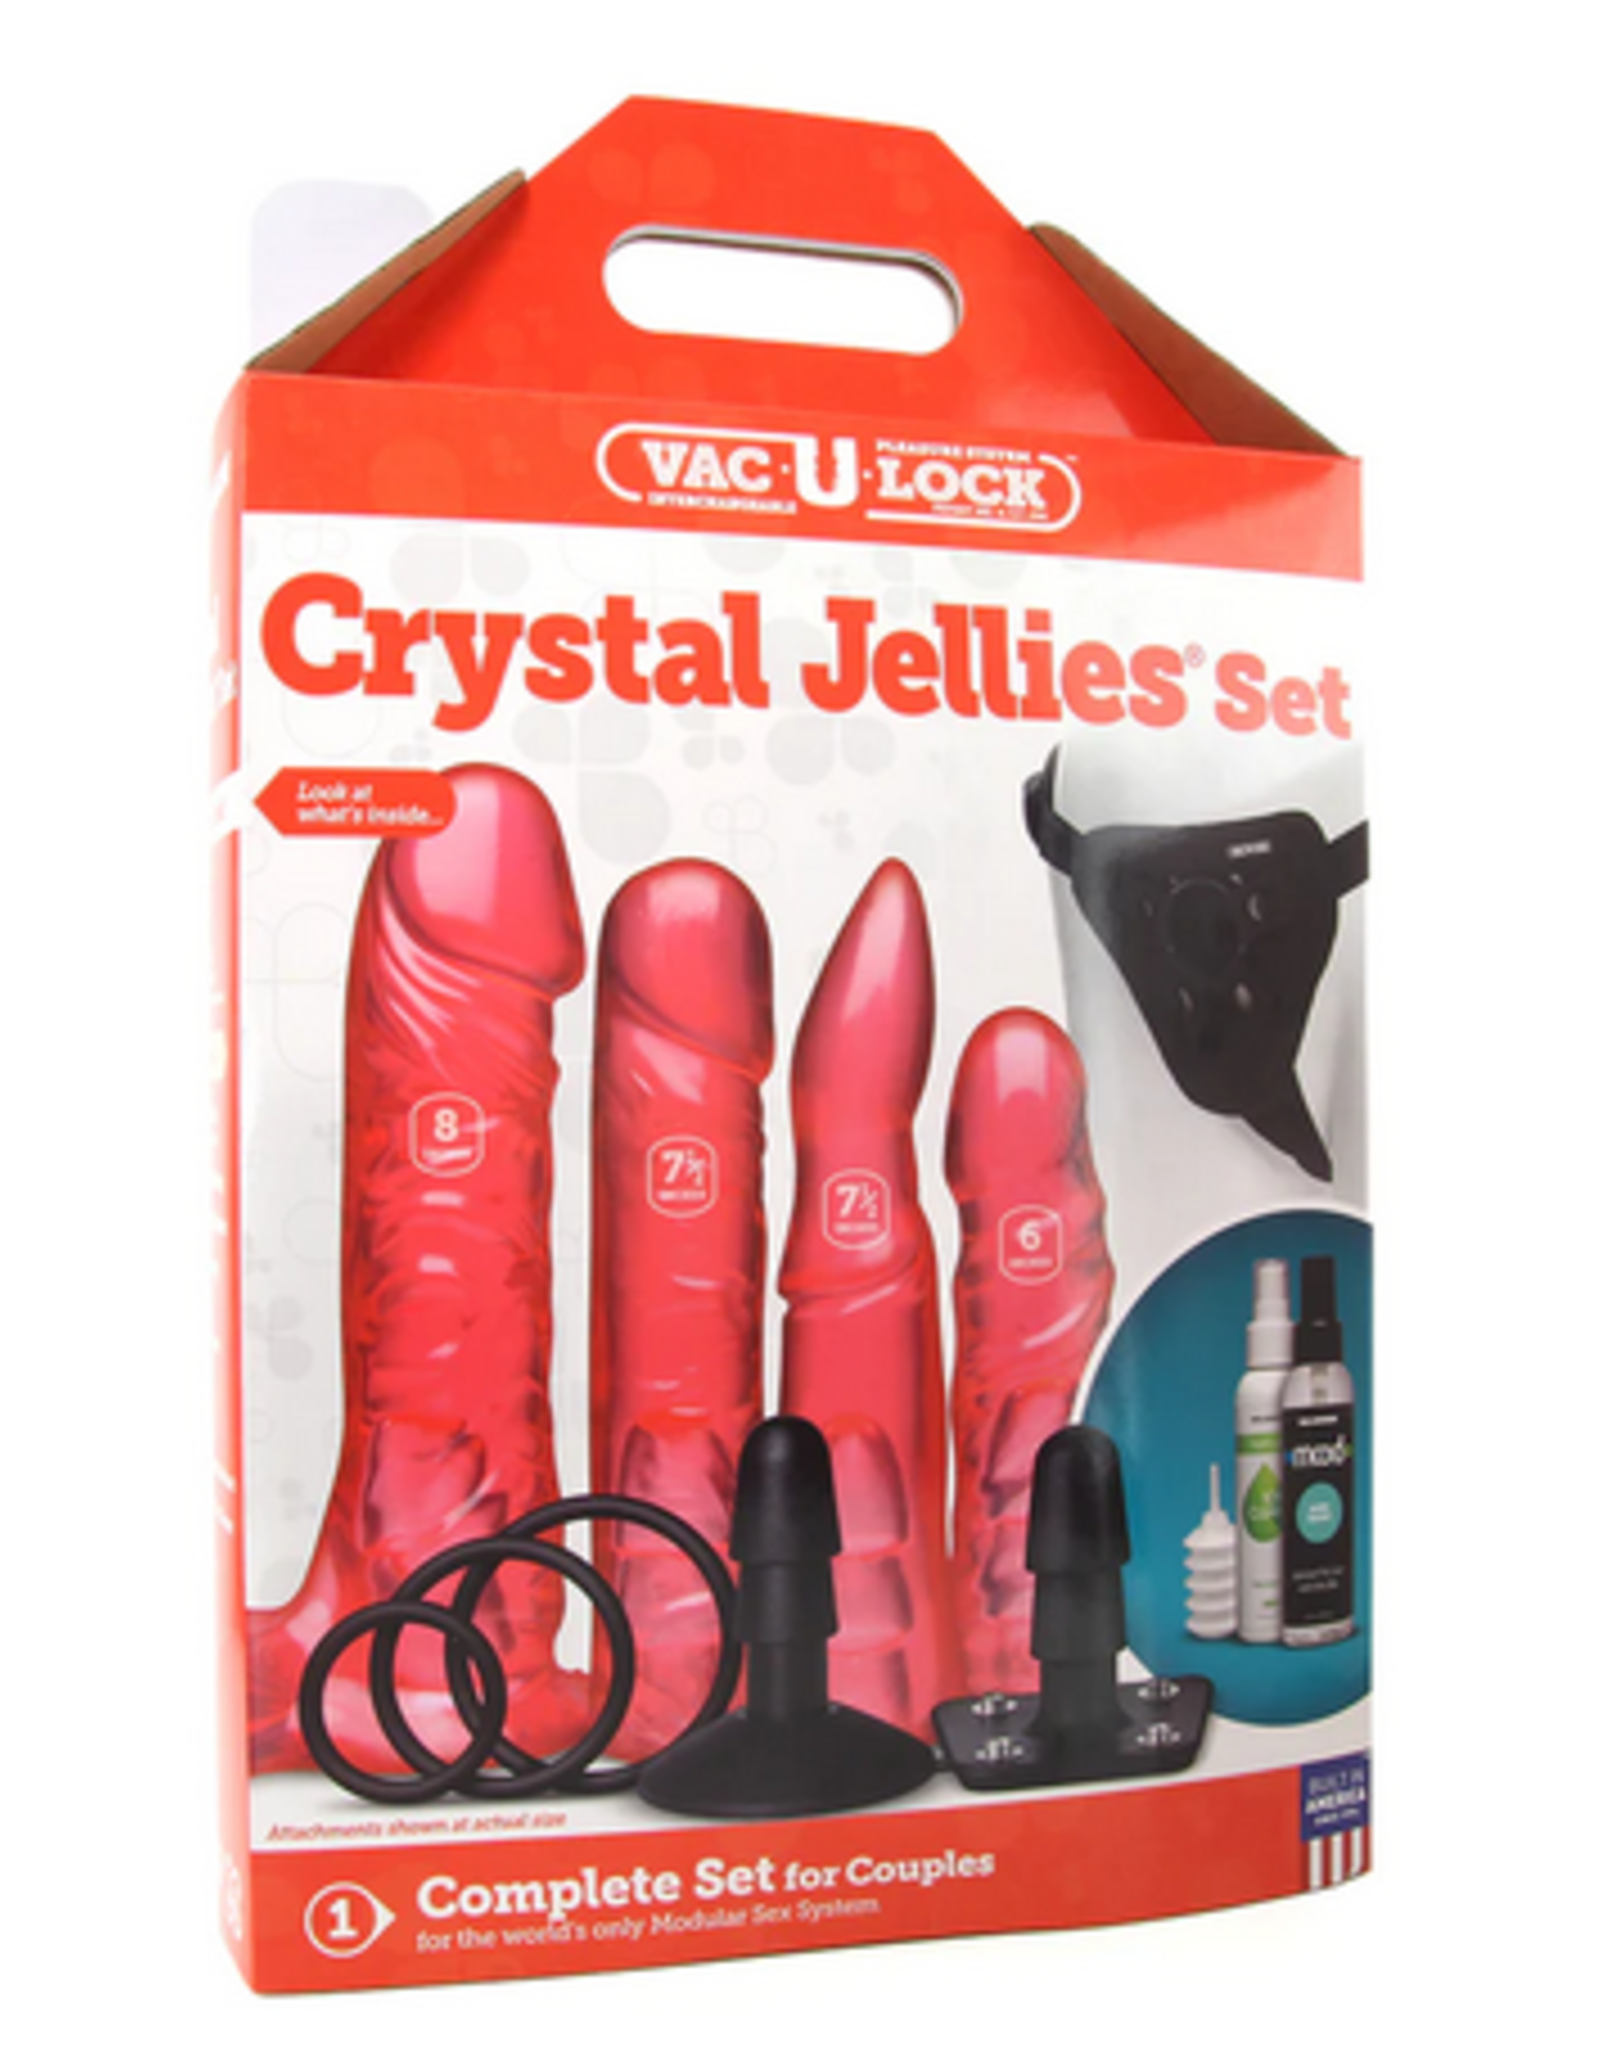 Doc Johnson Crystal Jellies - Vac-U-Lock Harness Set for Couples